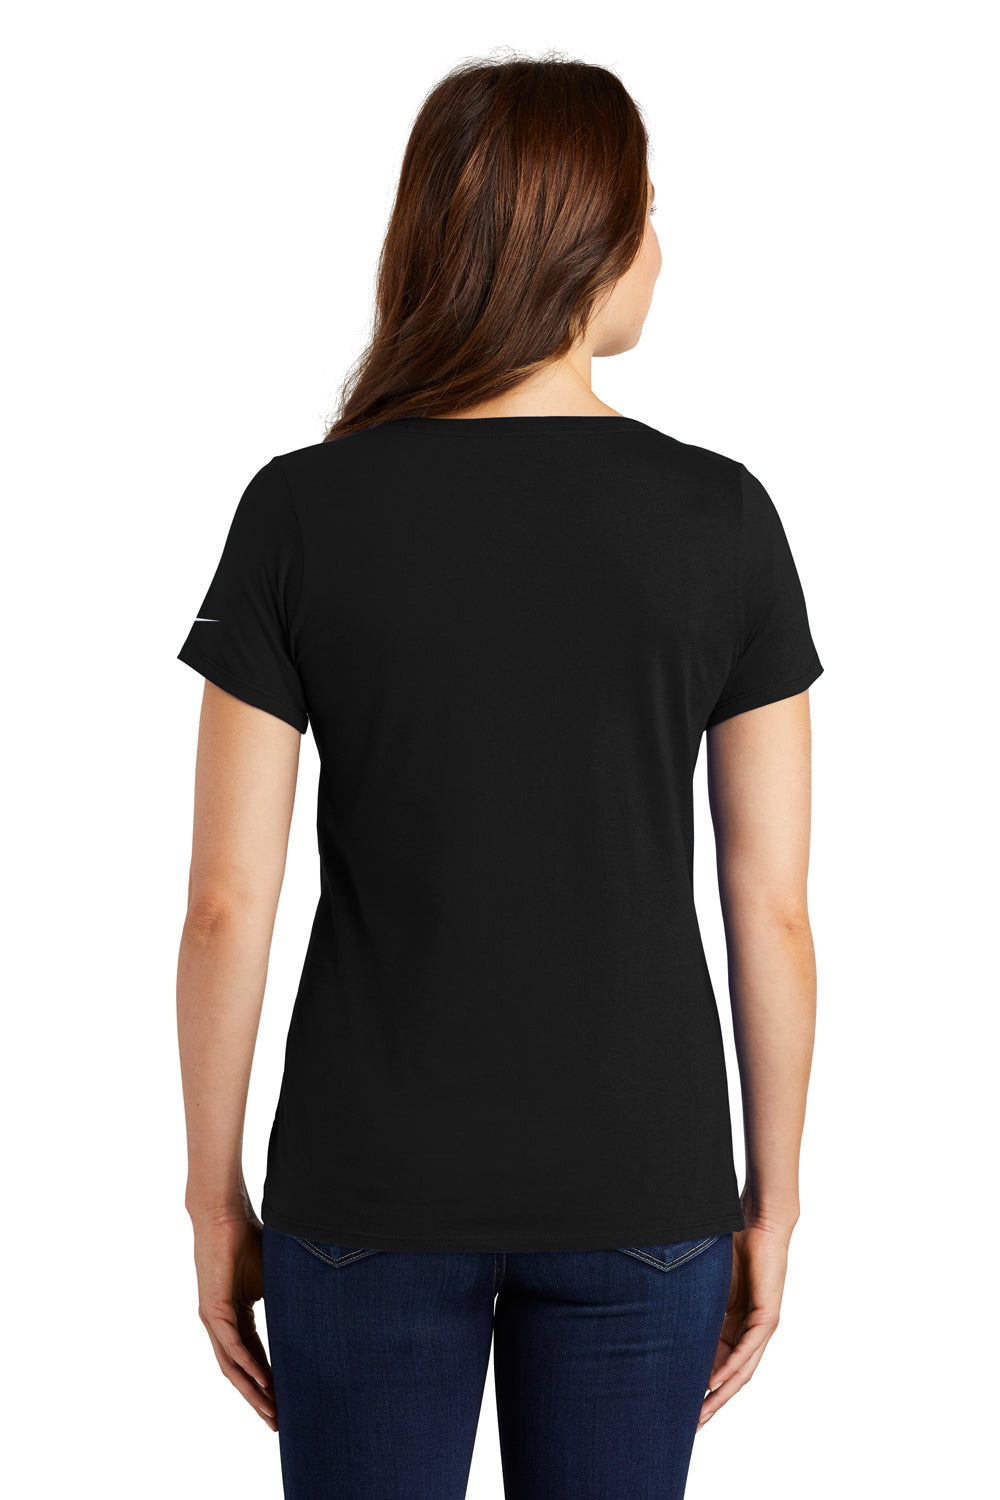 Nike NKBQ5236 Womens Core Short Sleeve Scoop Neck T-Shirt Black Back